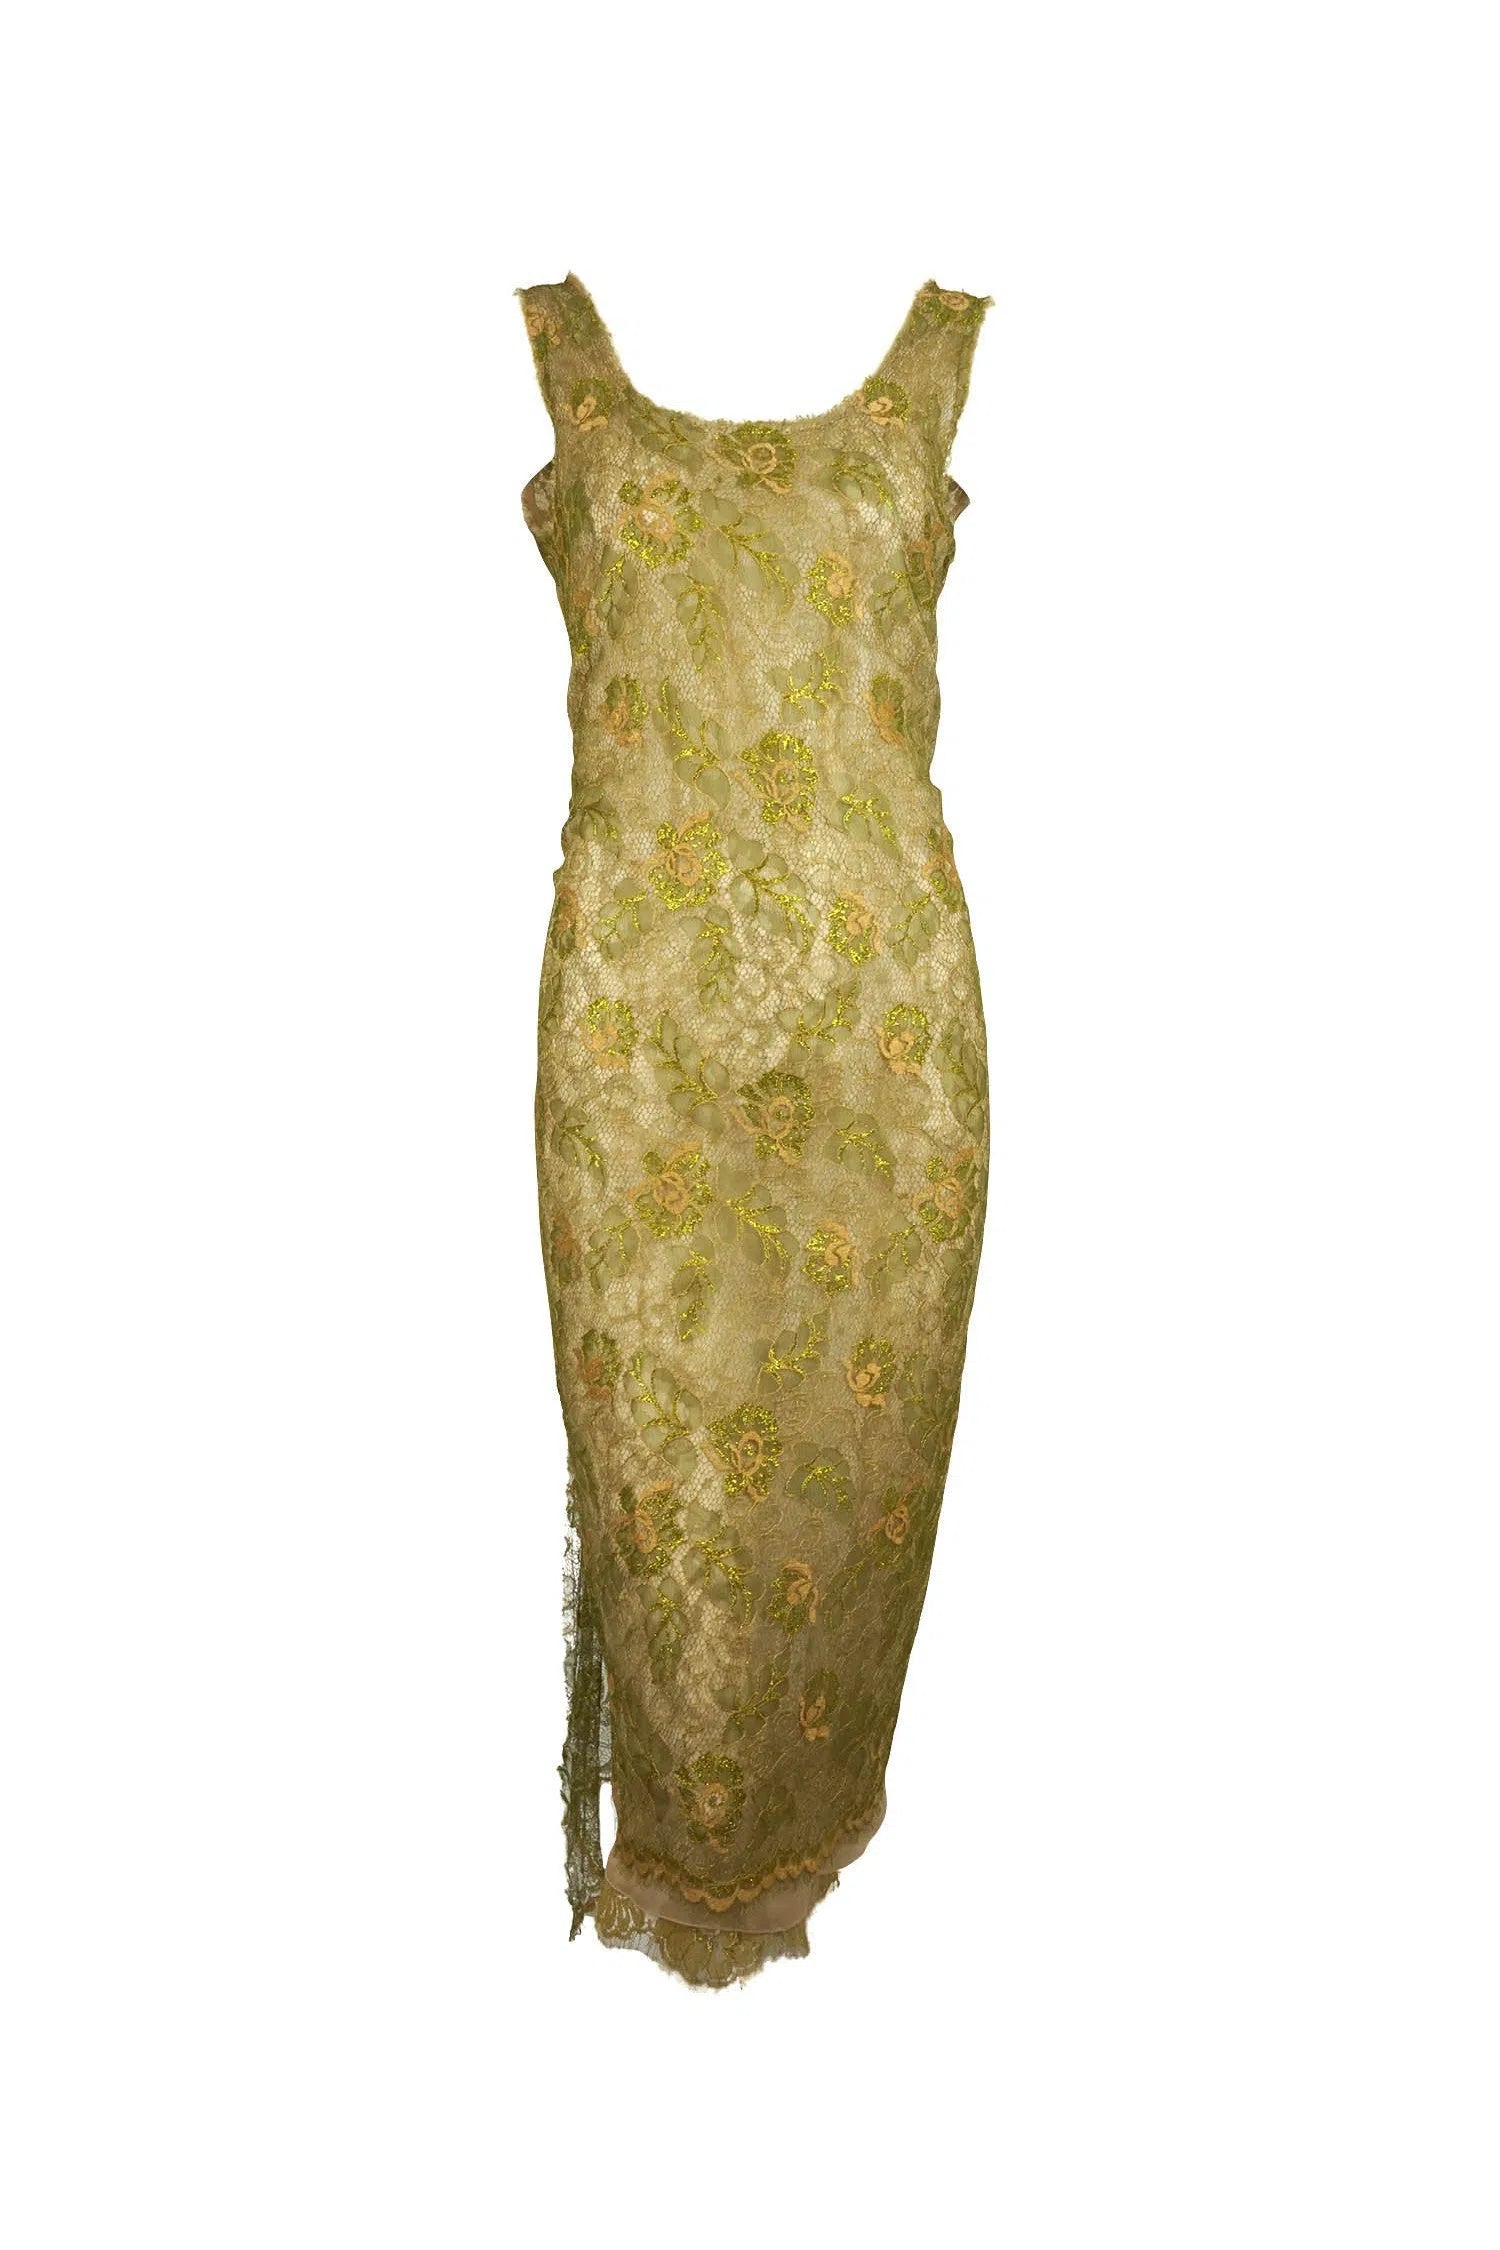 Lanvin Metallic Lace Backless Bustle Dress